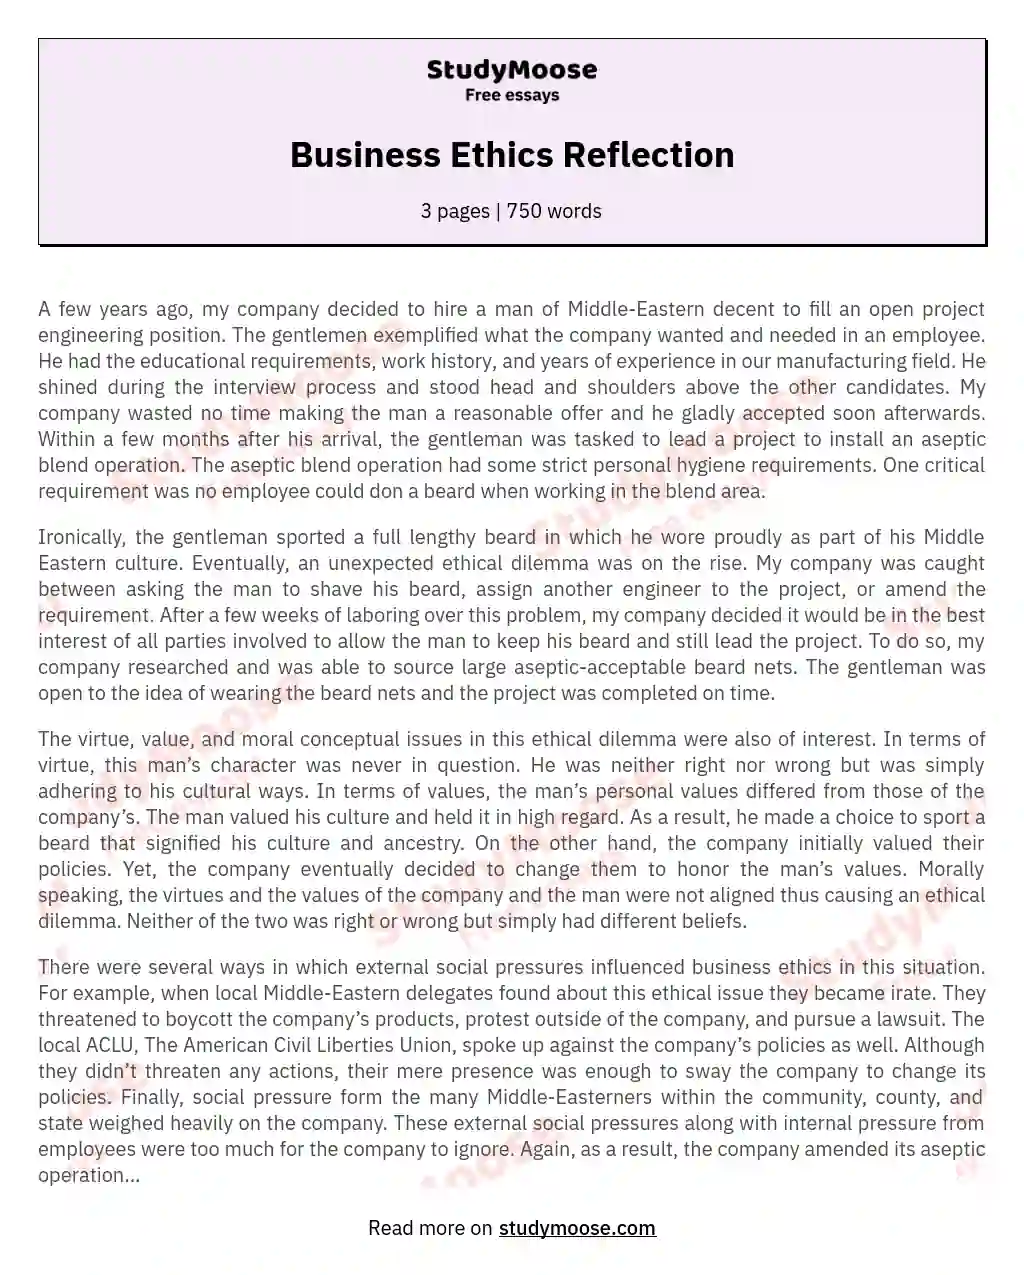 Business Ethics Reflection essay